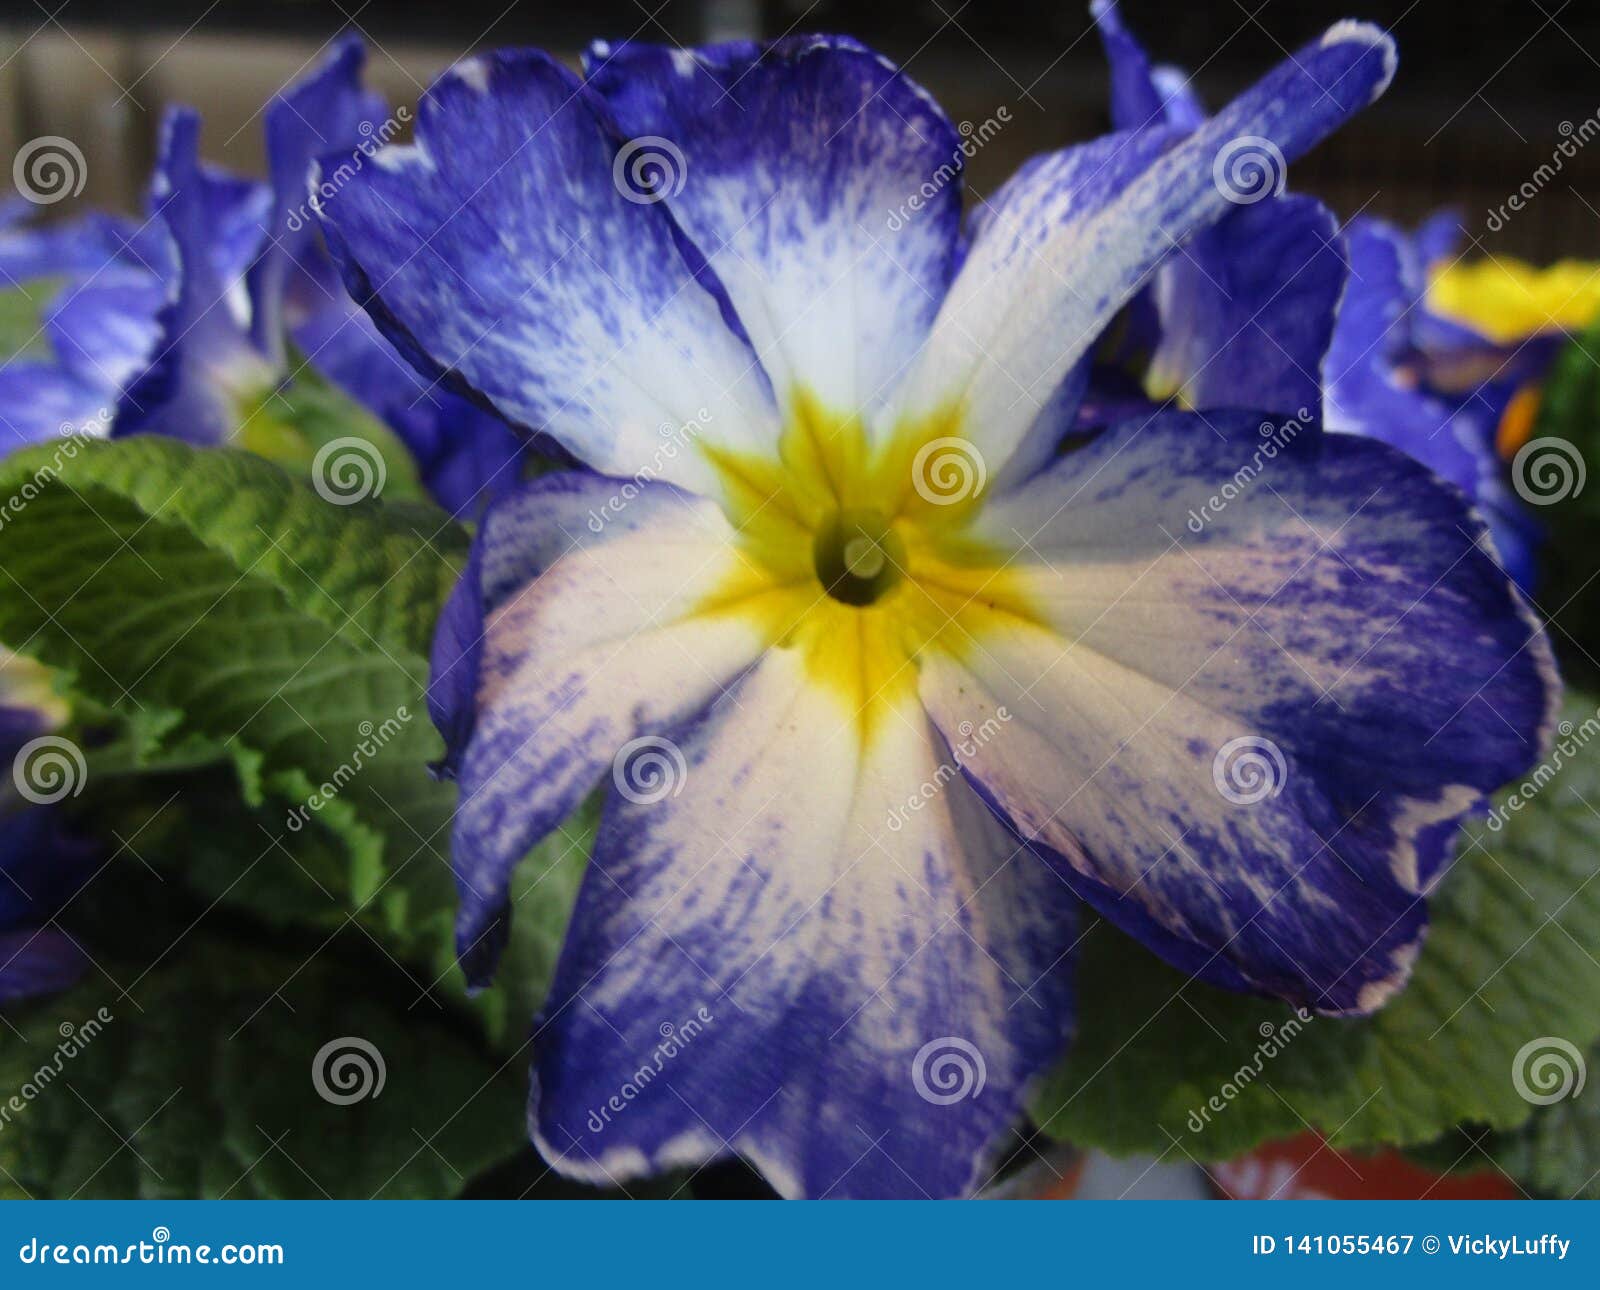 Close Up Blue-white-yellow Primrose Flower Close Up Stock Image - Image ...